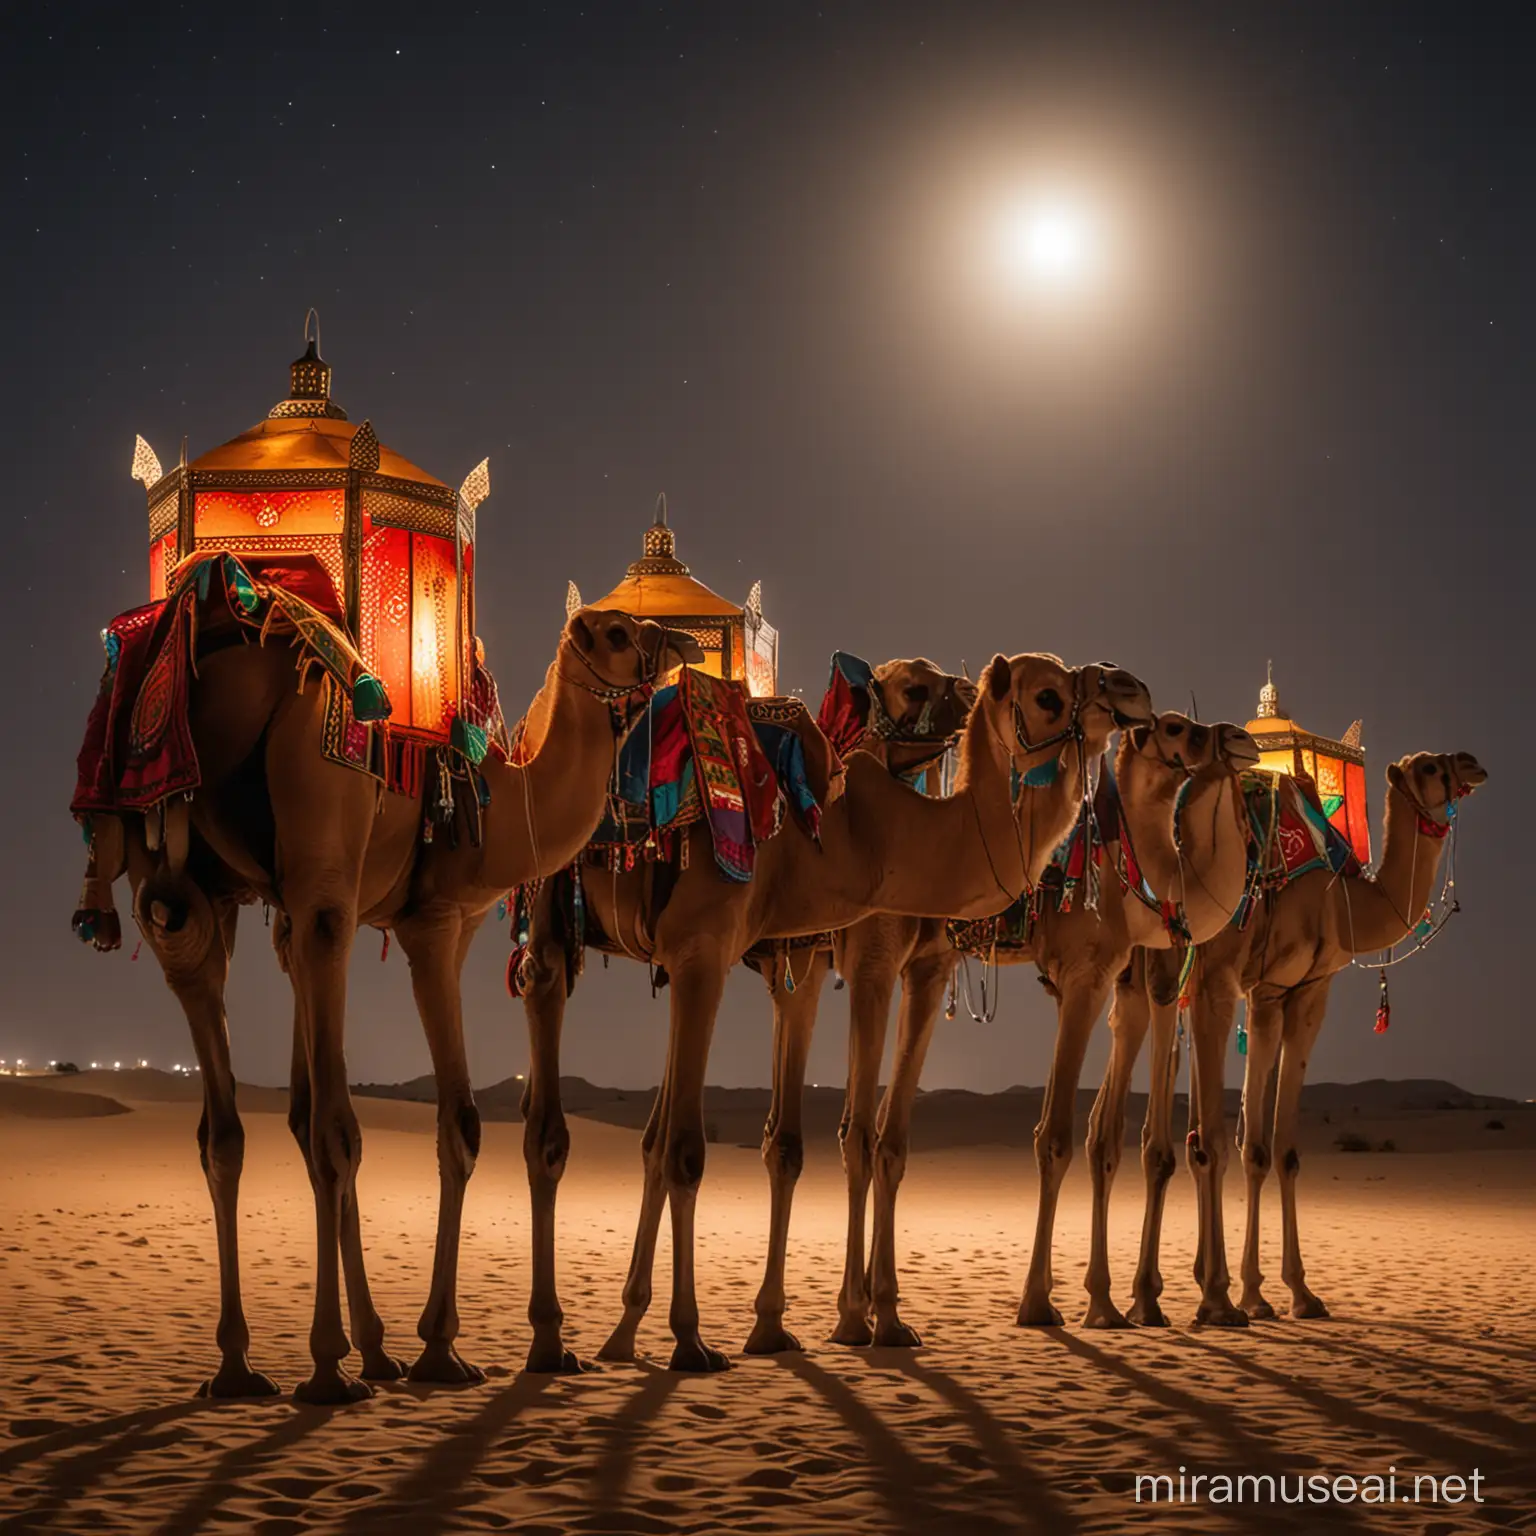 Nighttime Scene Majestic Arabian Lanterns Adorning Camels